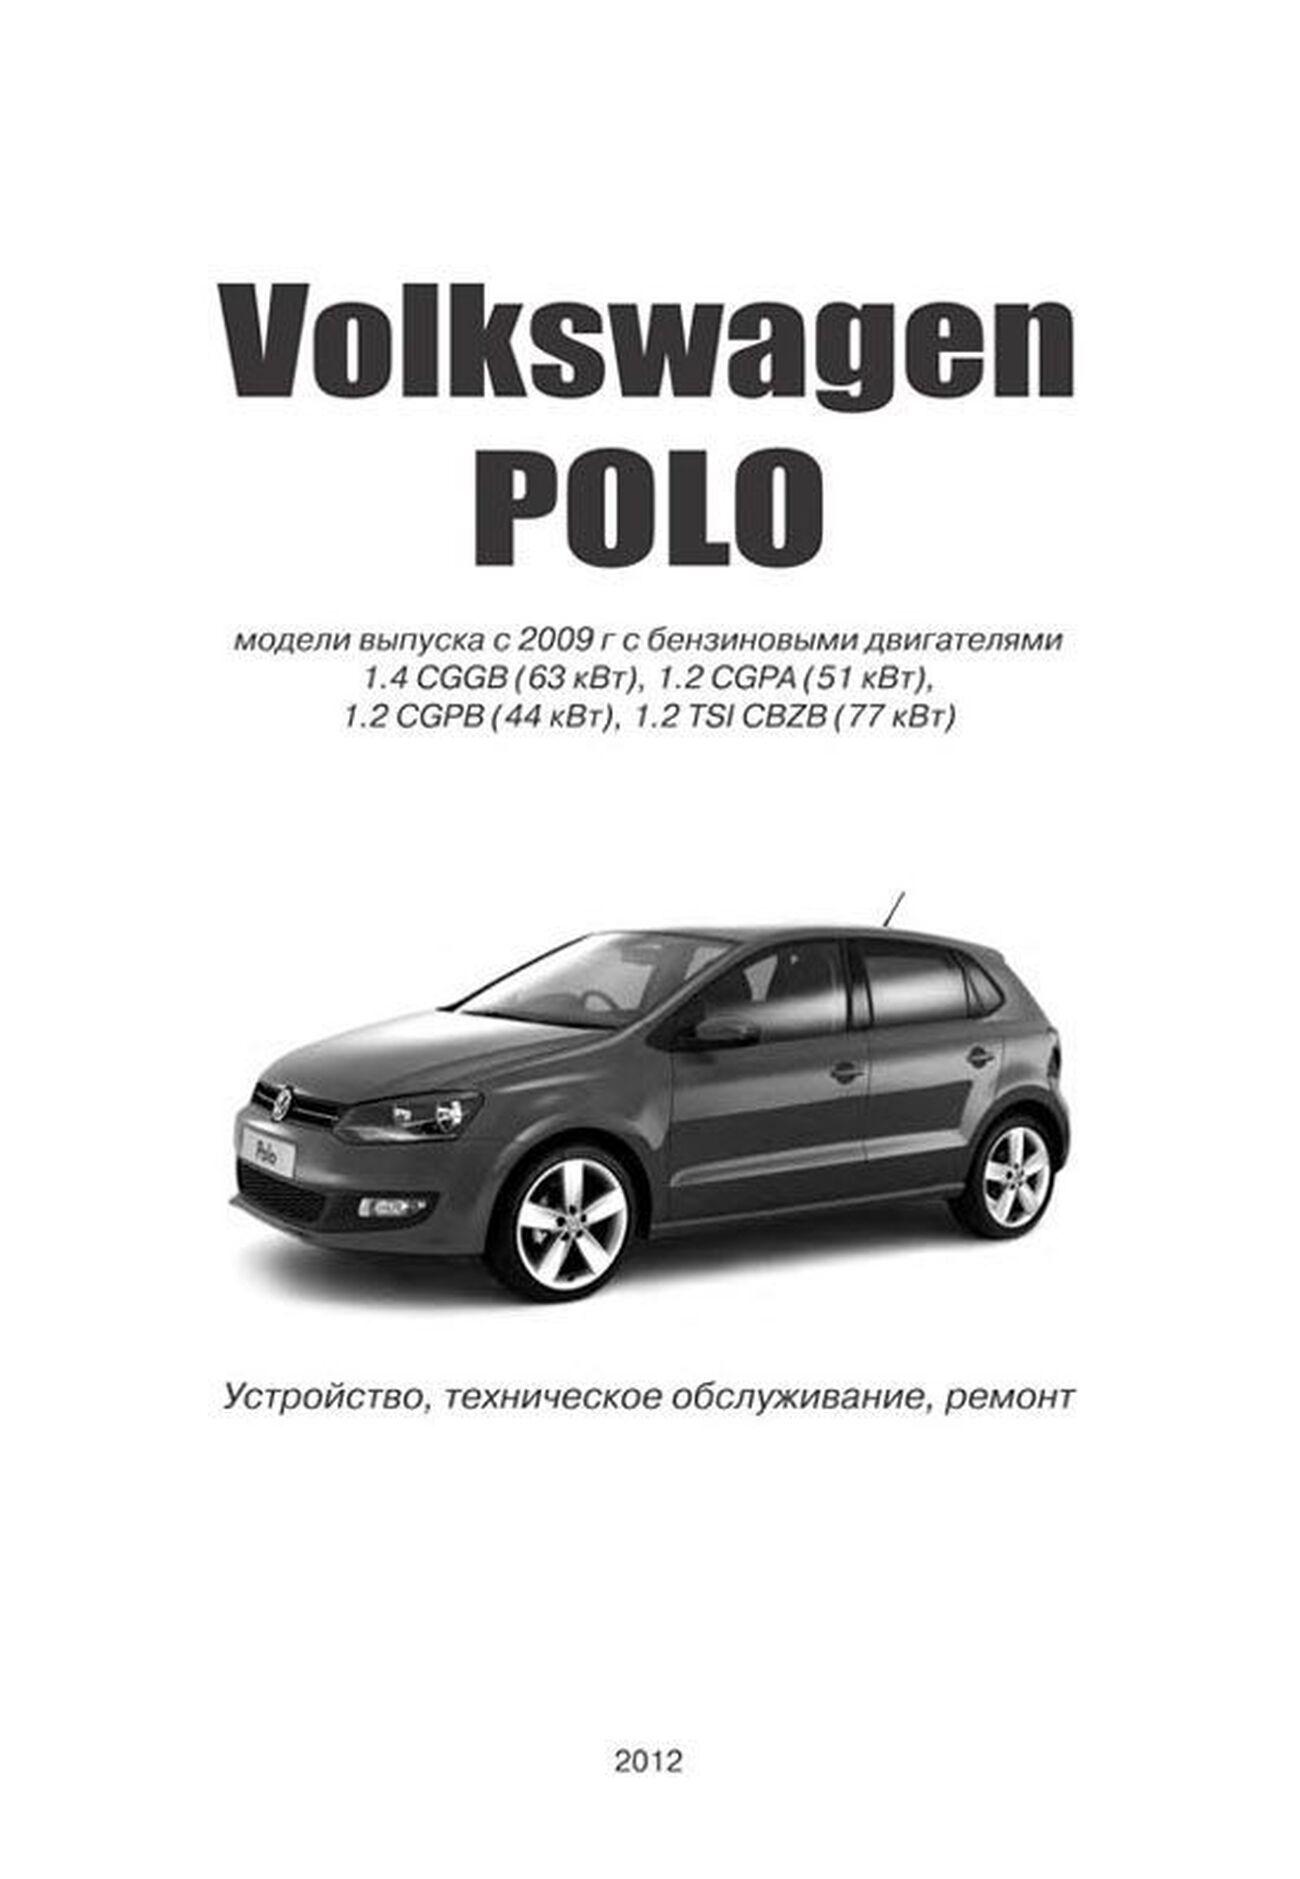 Книга: VOLKSWAGEN POLO (б) с 2009 г.в. рем., экспл., то | Автонавигатор